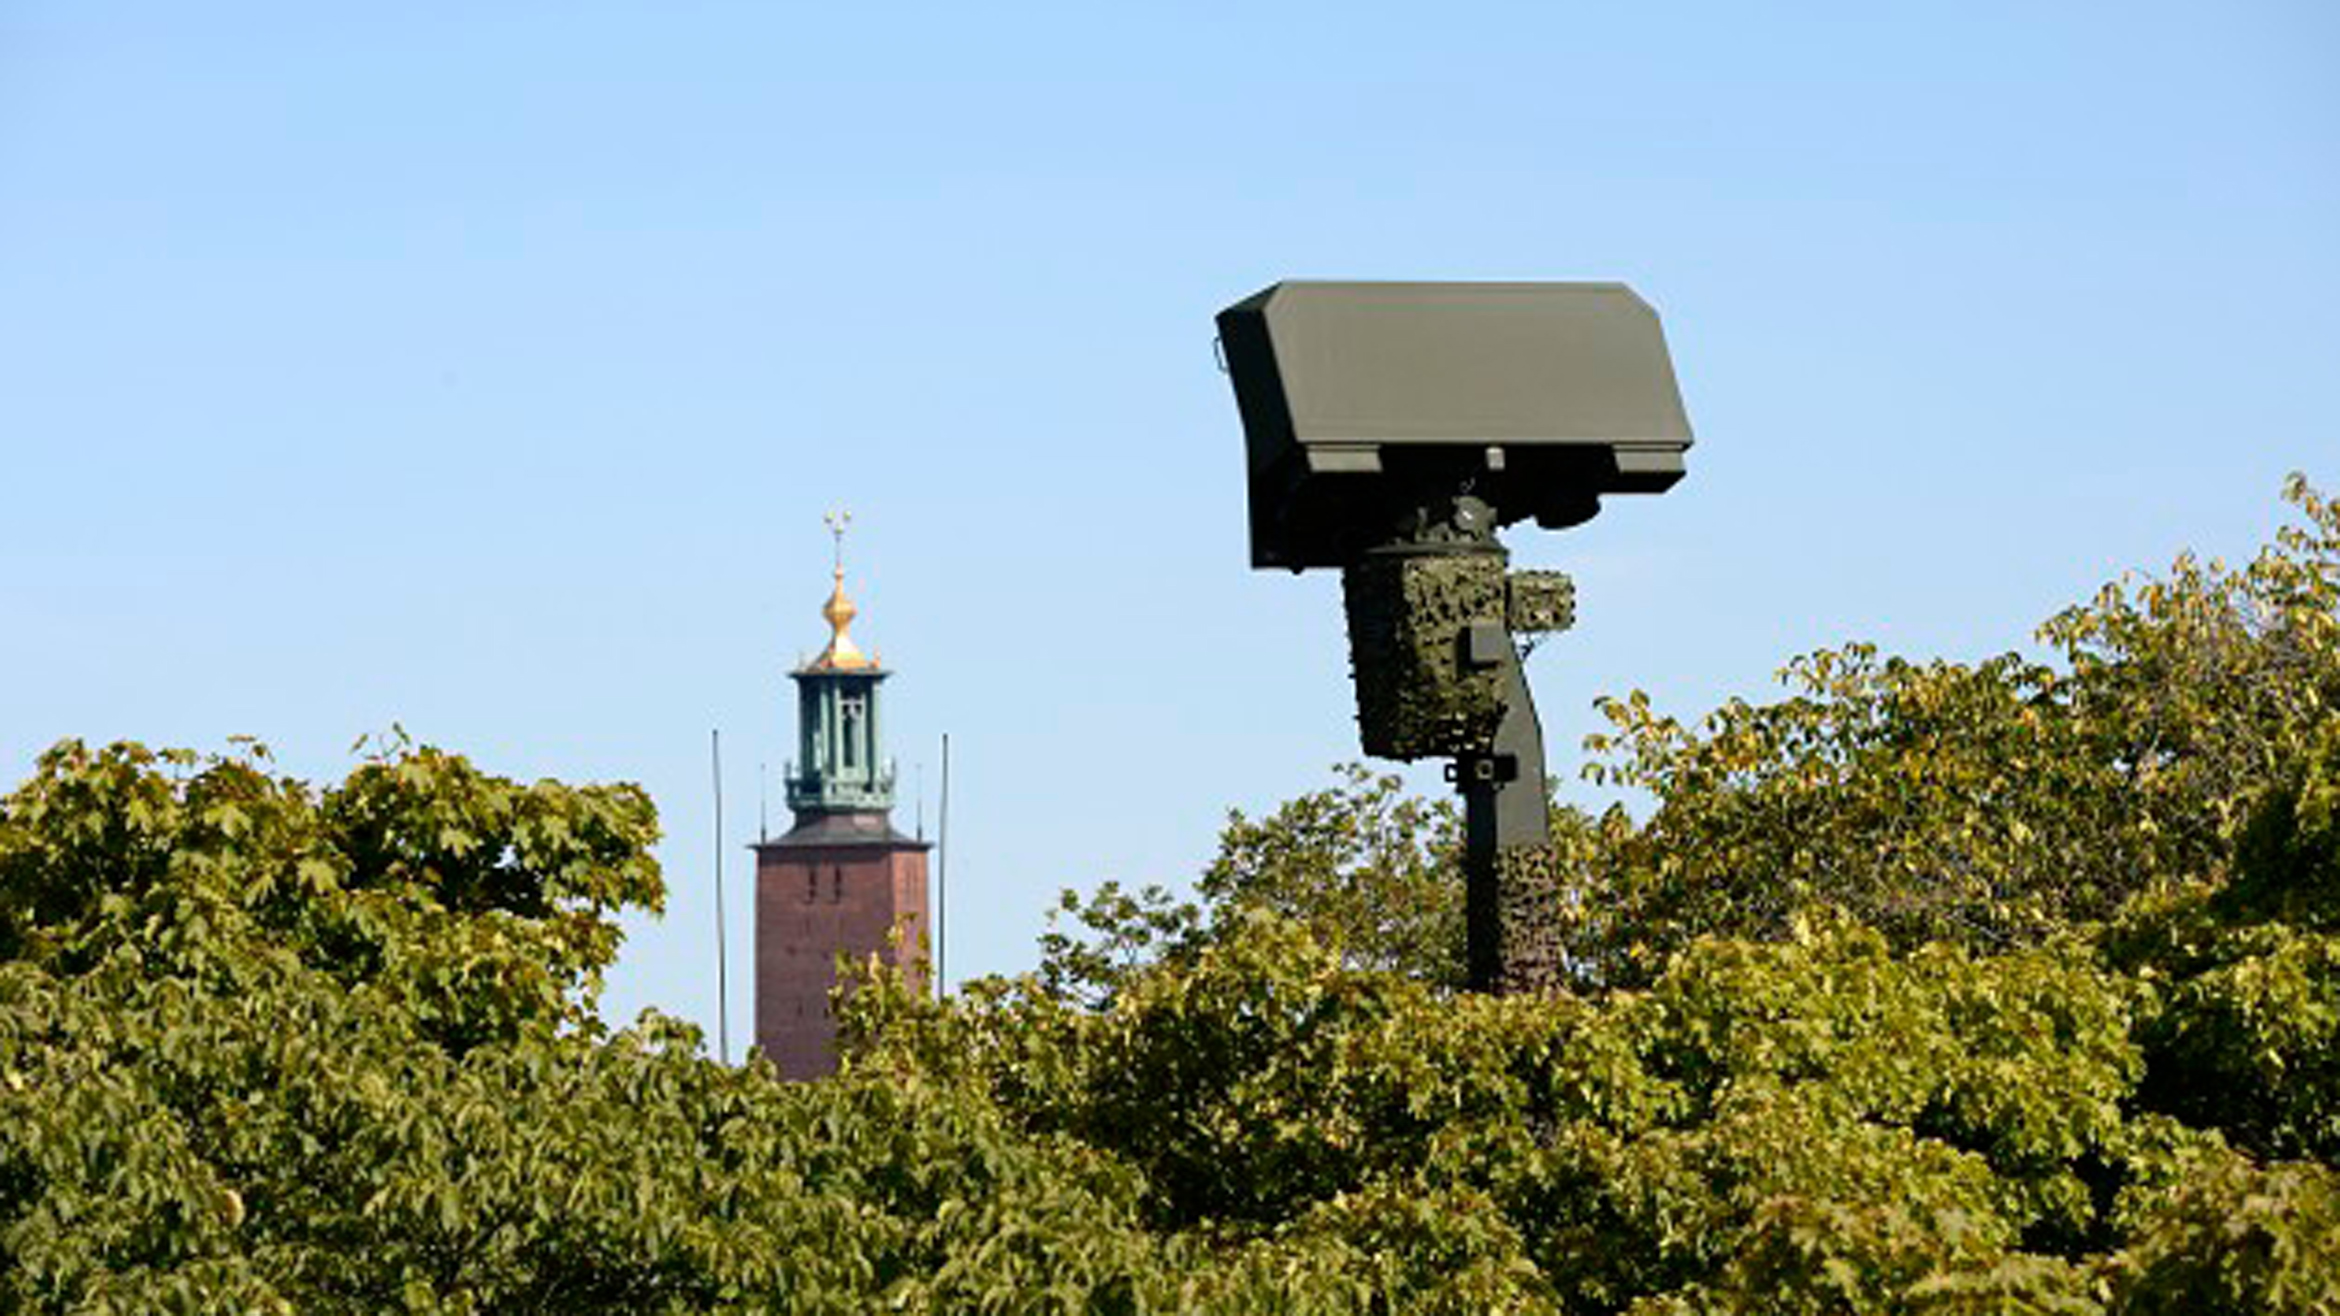 Giraffe radar in Stockholm, Sweden, 2013.
 